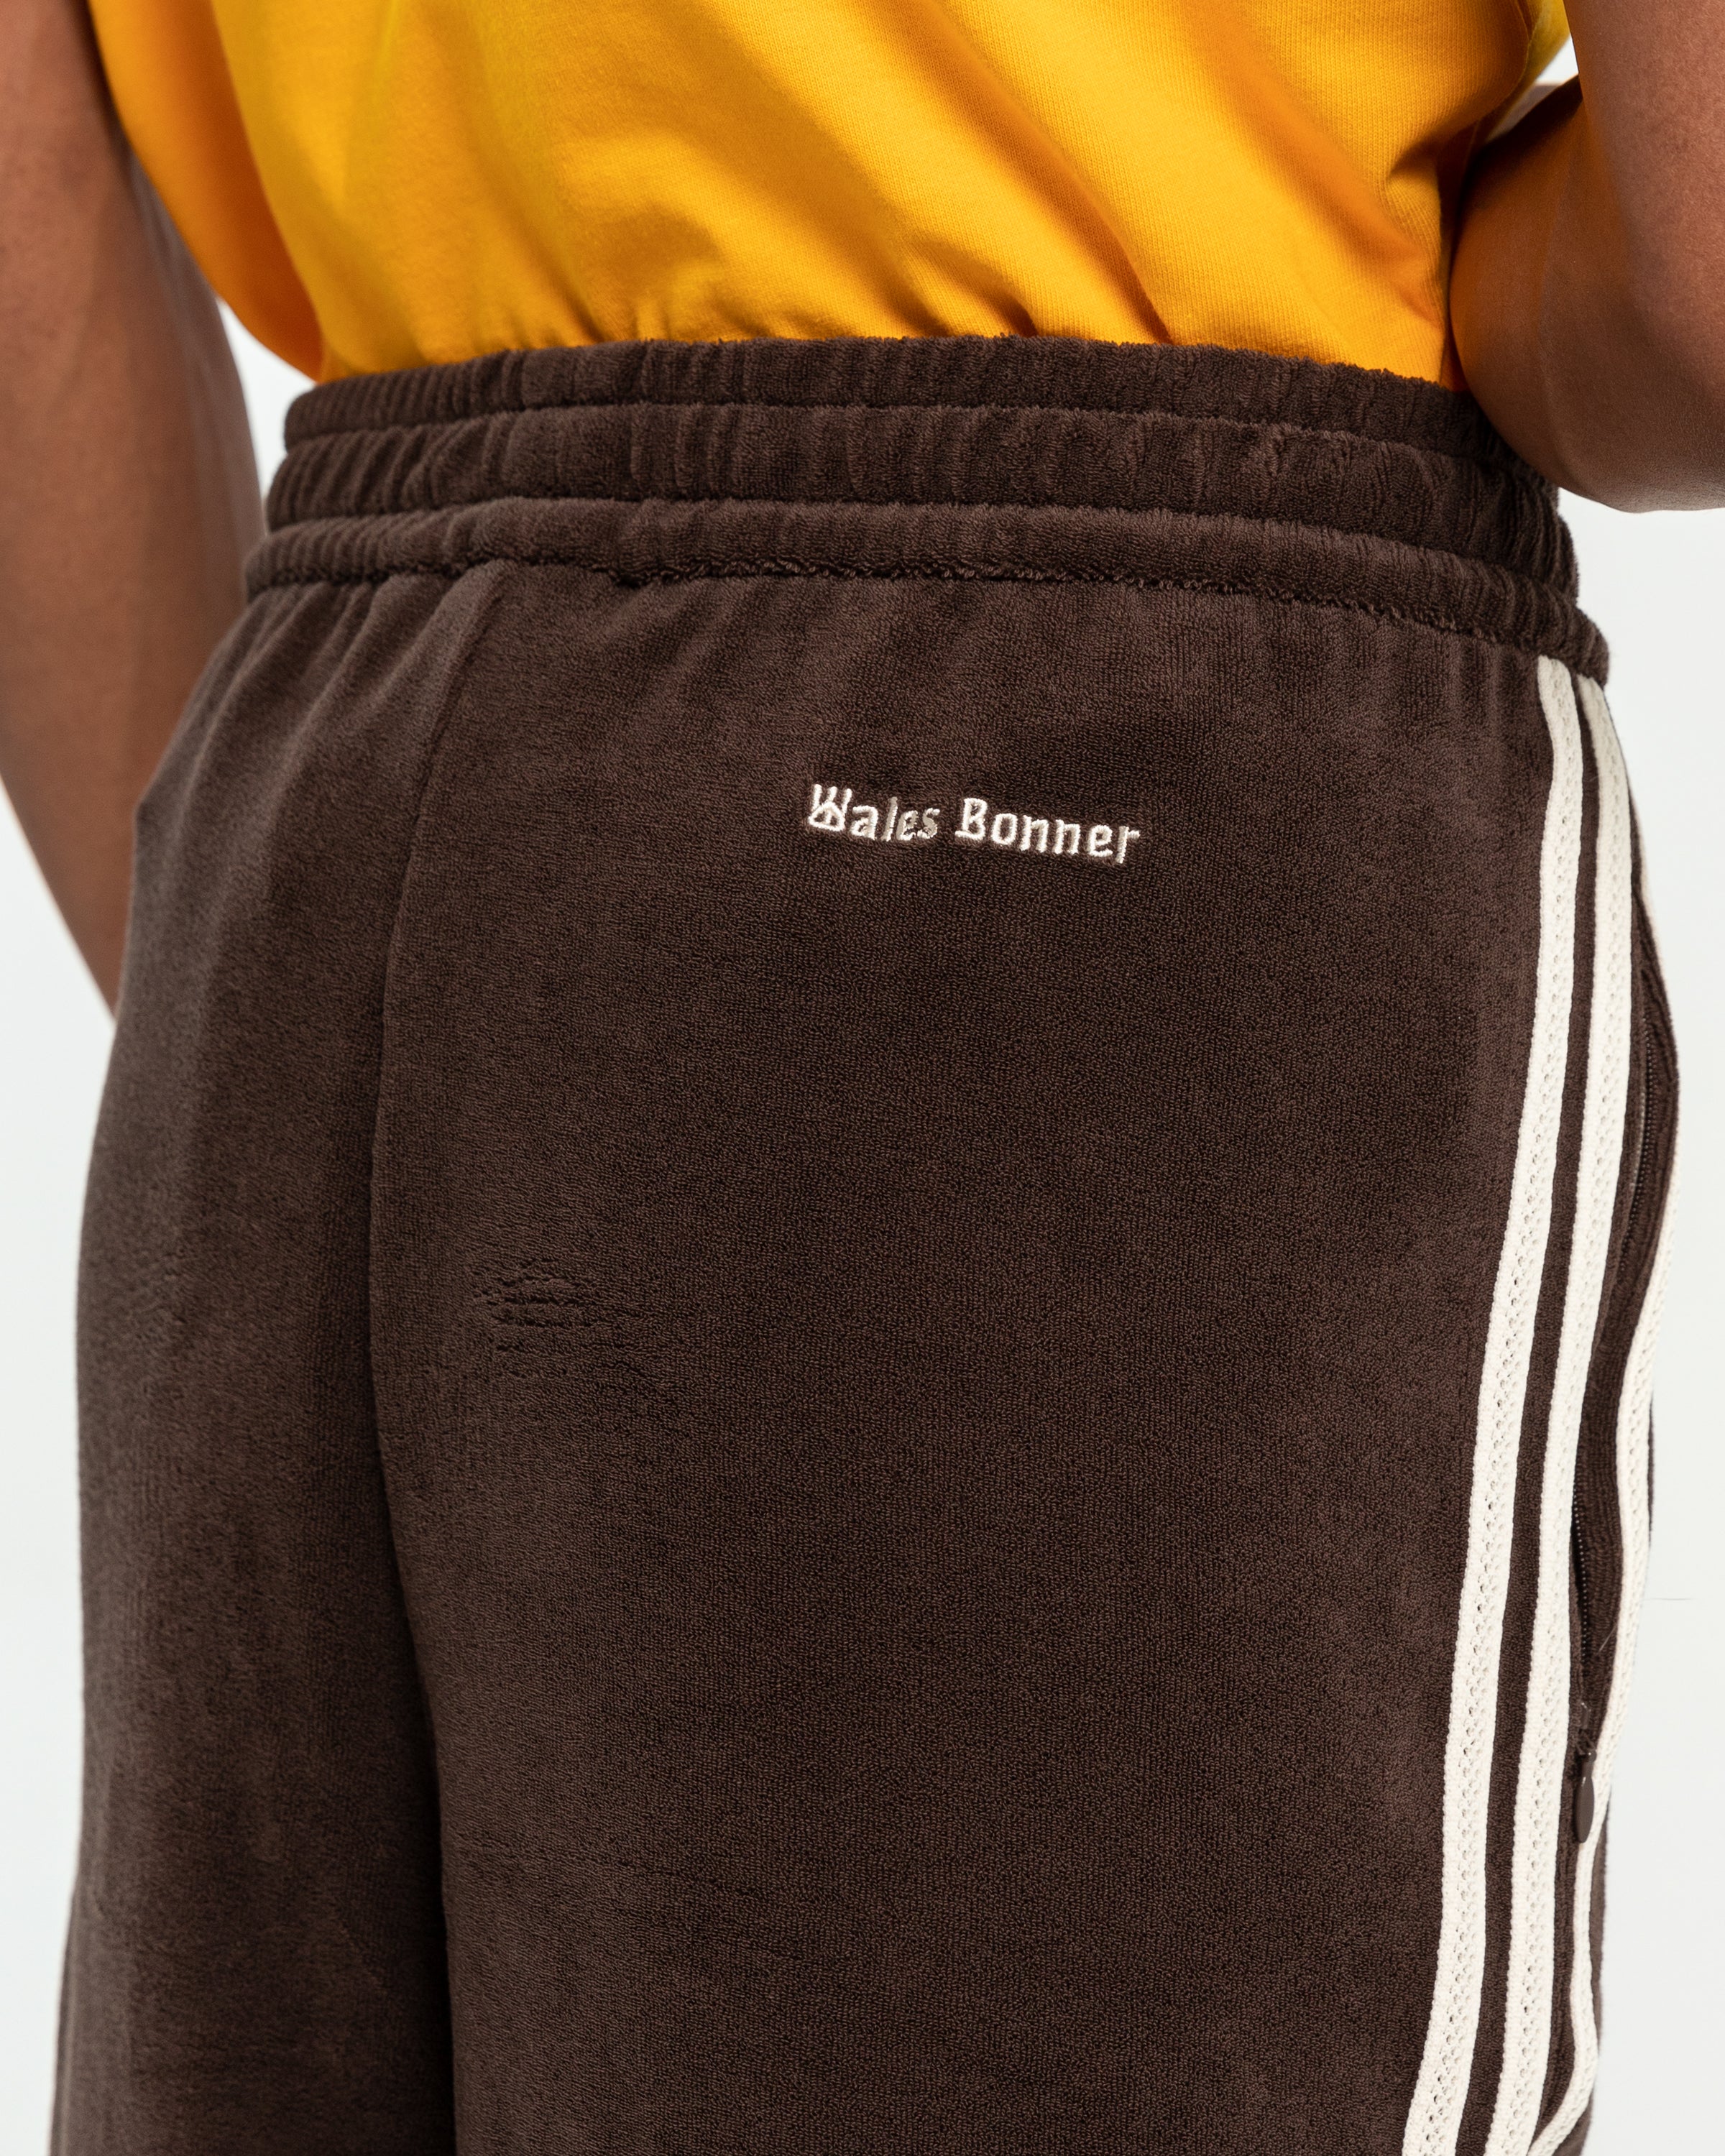 Wales Bonner Twill Shorts in Dark Brown